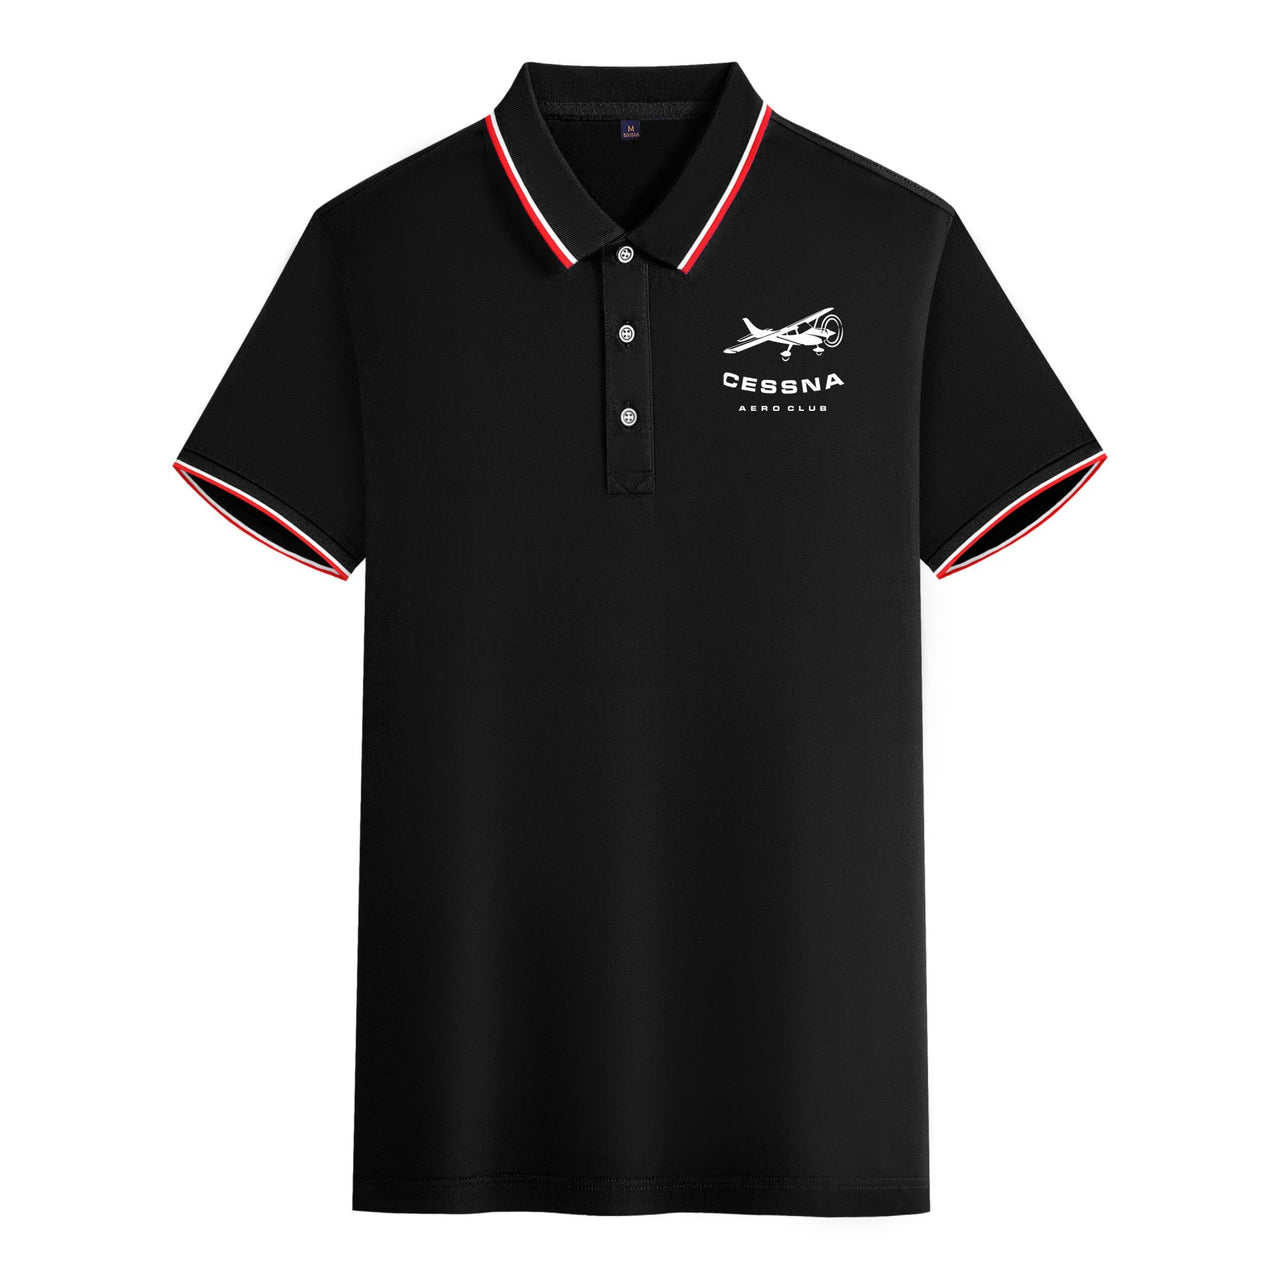 Cessna Aeroclub Designed Stylish Polo T-Shirts